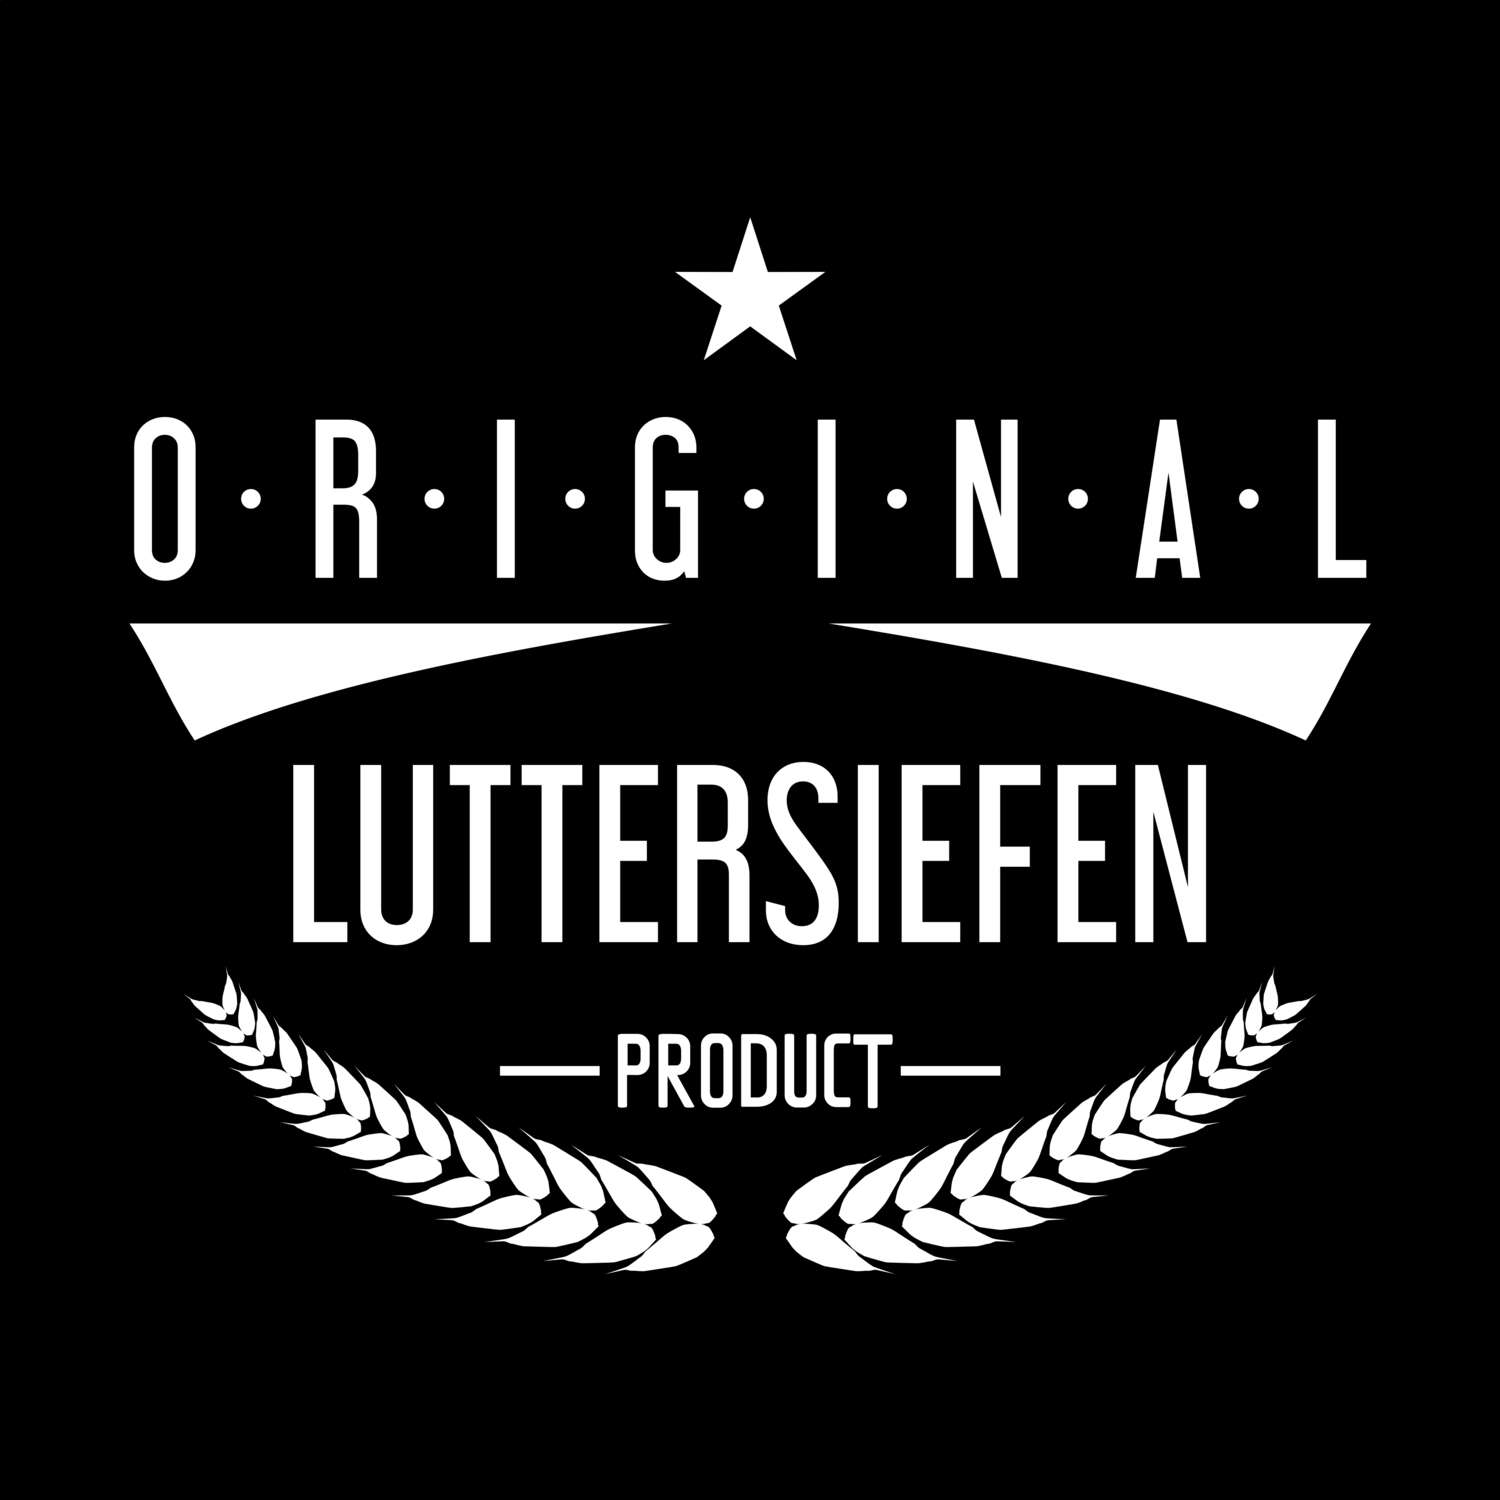 Luttersiefen T-Shirt »Original Product«